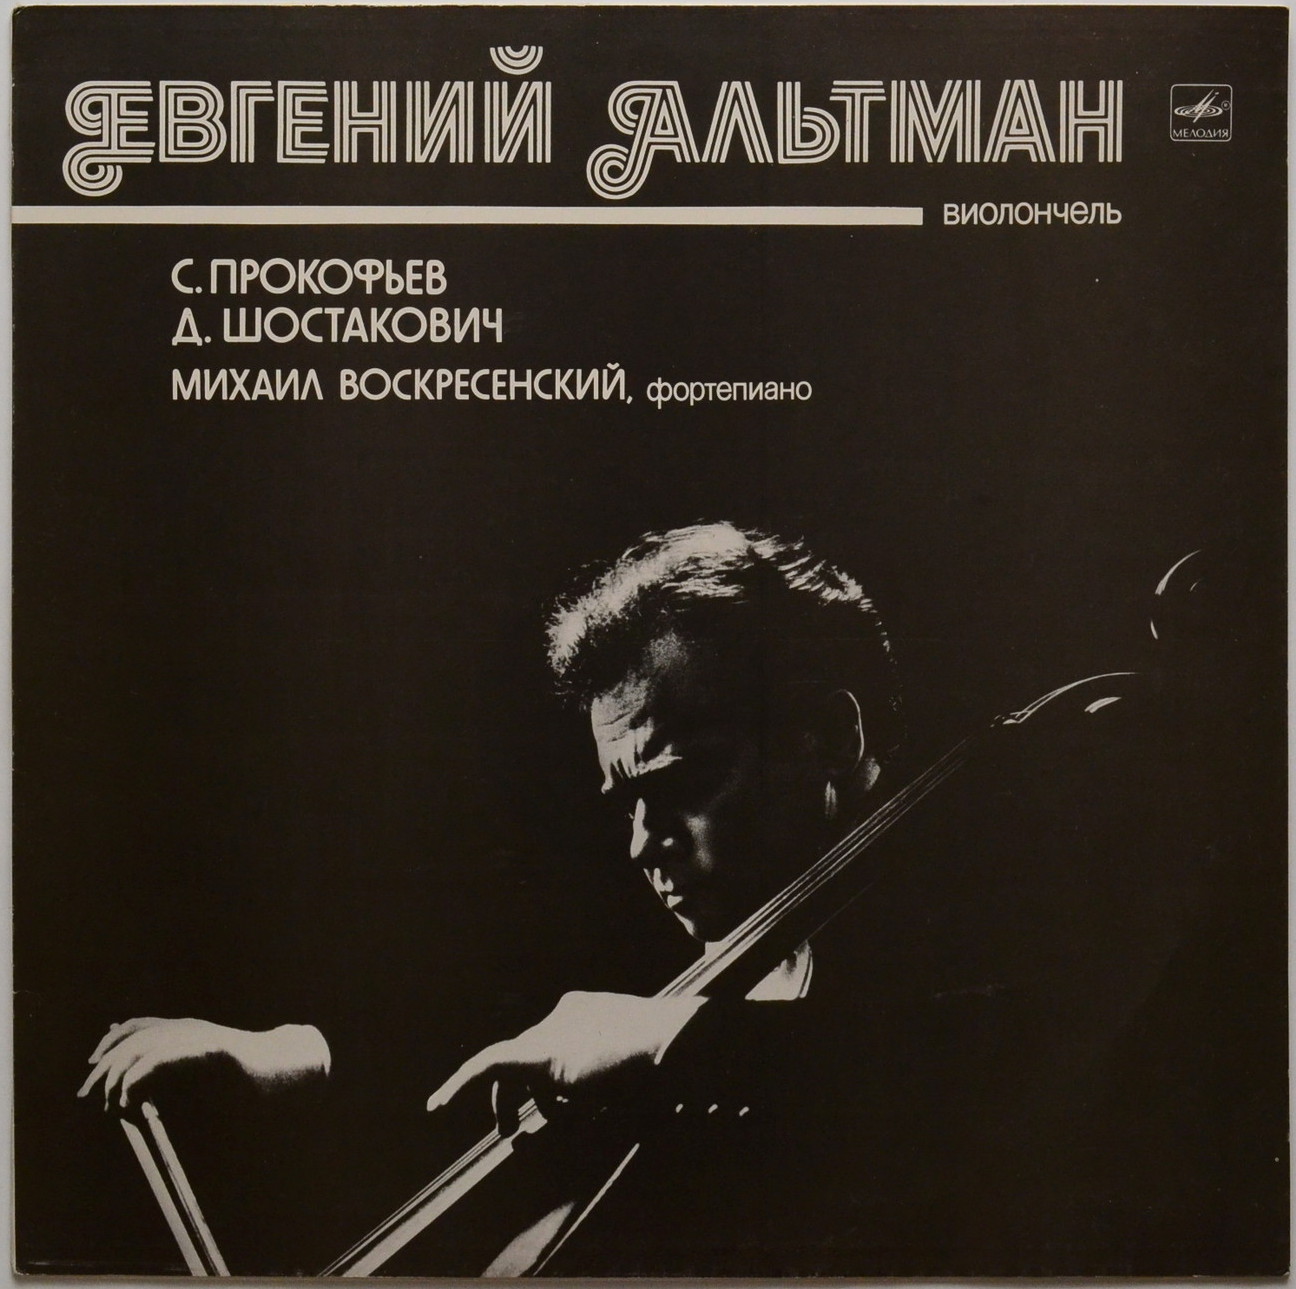 С. ПРОКОФЬЕВ (1891 - 1953): Соната для виолончели и ф-но до мажор, соч. 119; // Д. ШОСТАКОВИЧ (1906-1975): Соната для виолончели и ф-но ре минор, соч. 40.